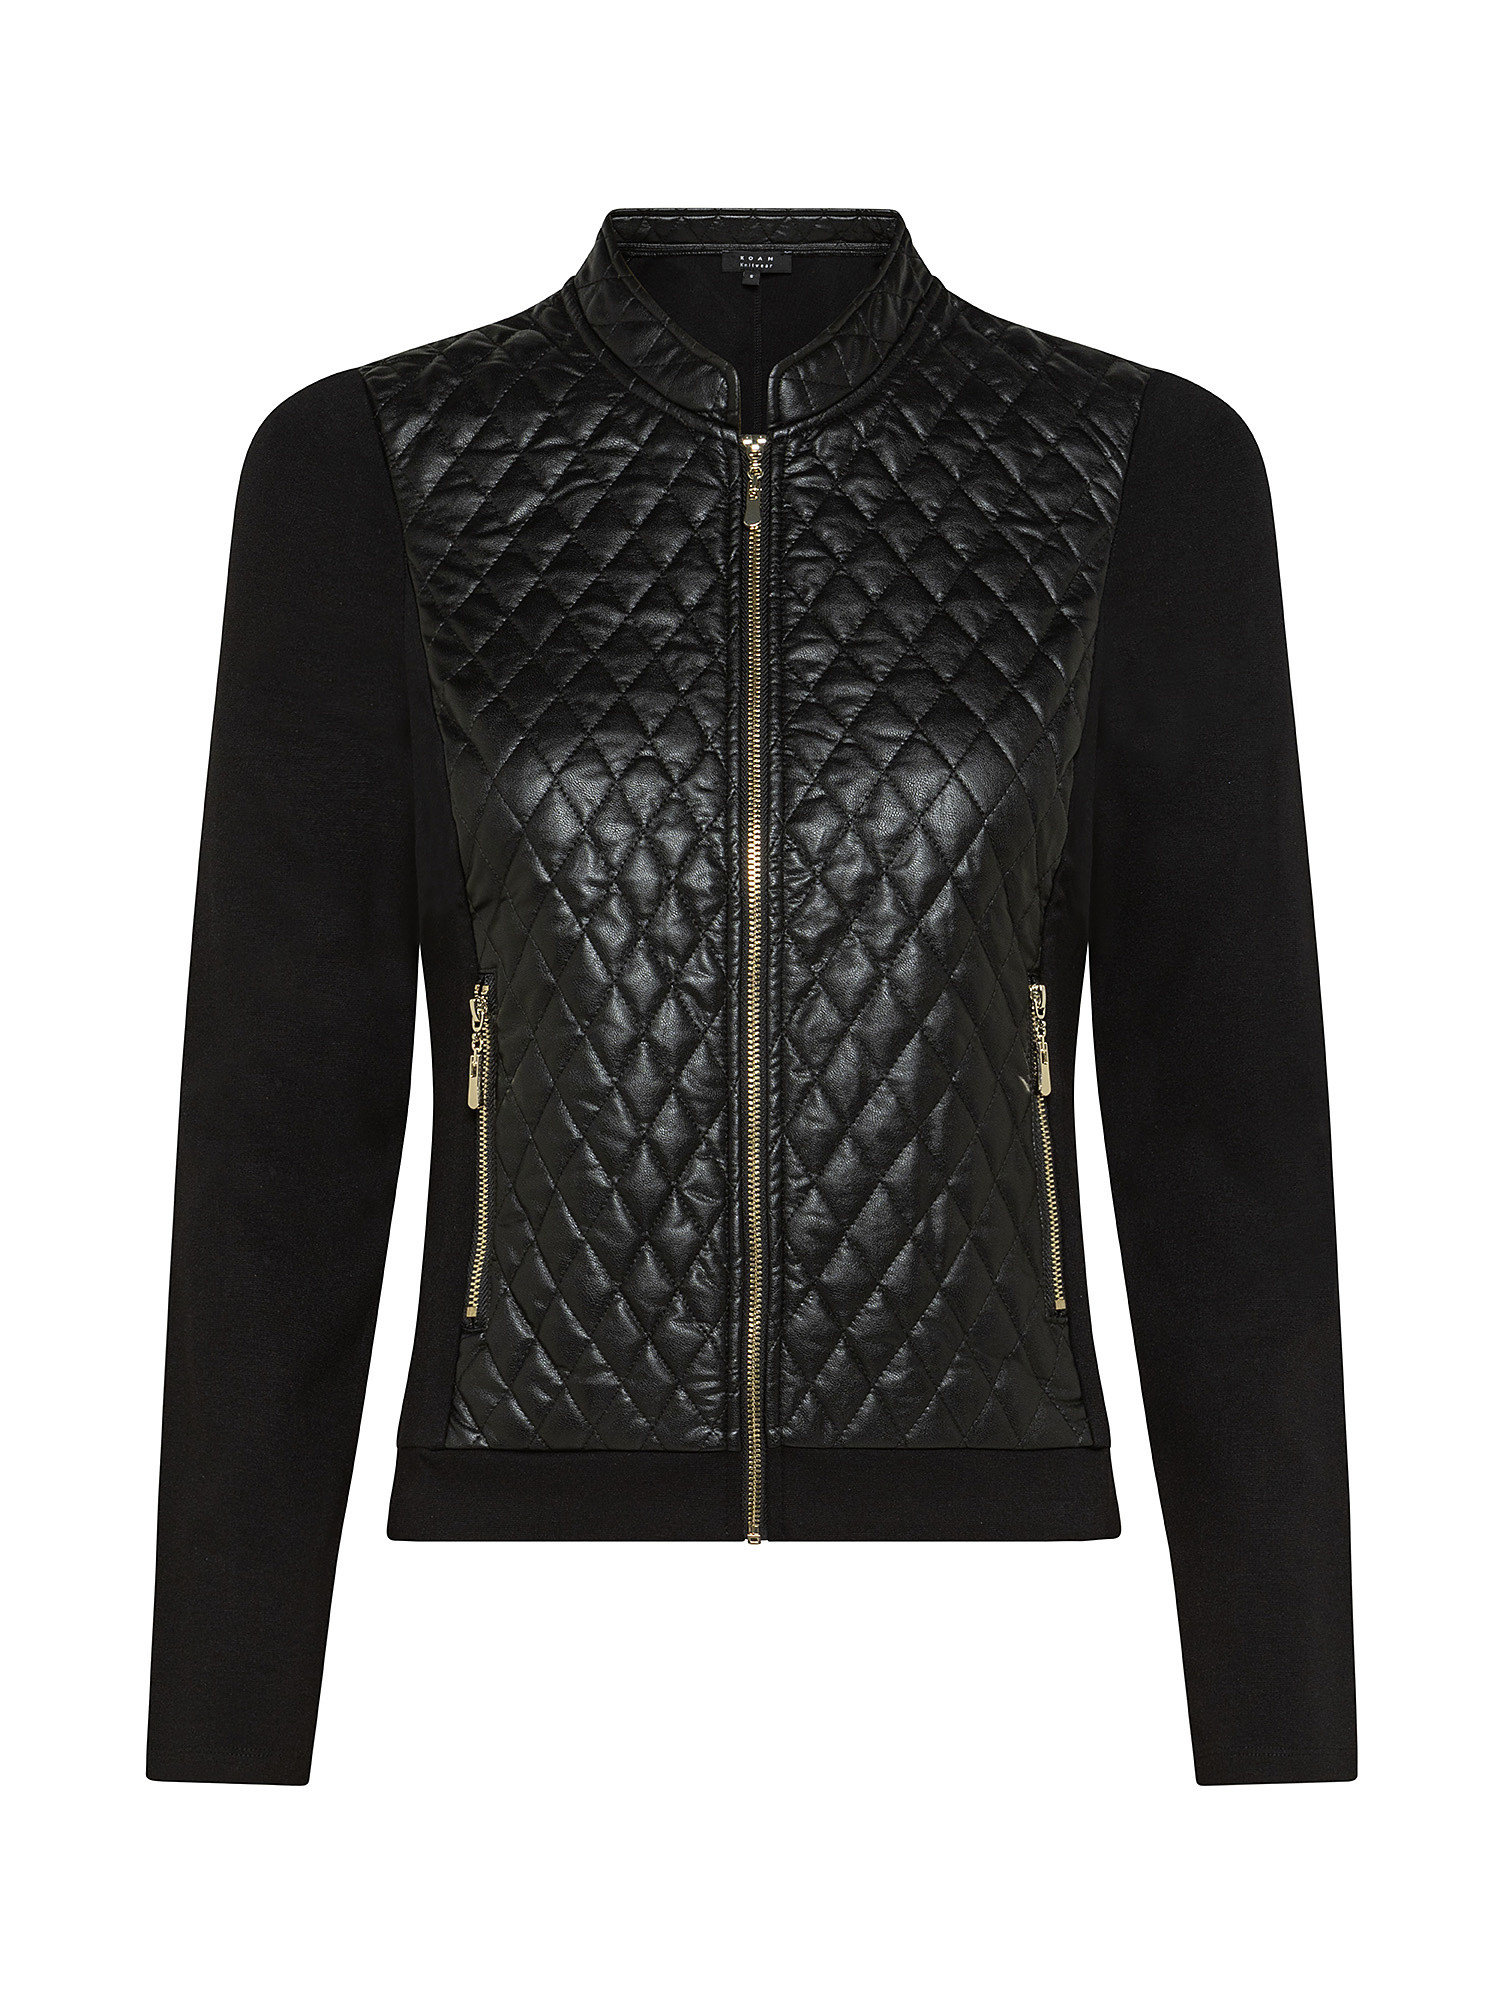 Koan - Jacket with eco-leather inserts, Black, large image number 0